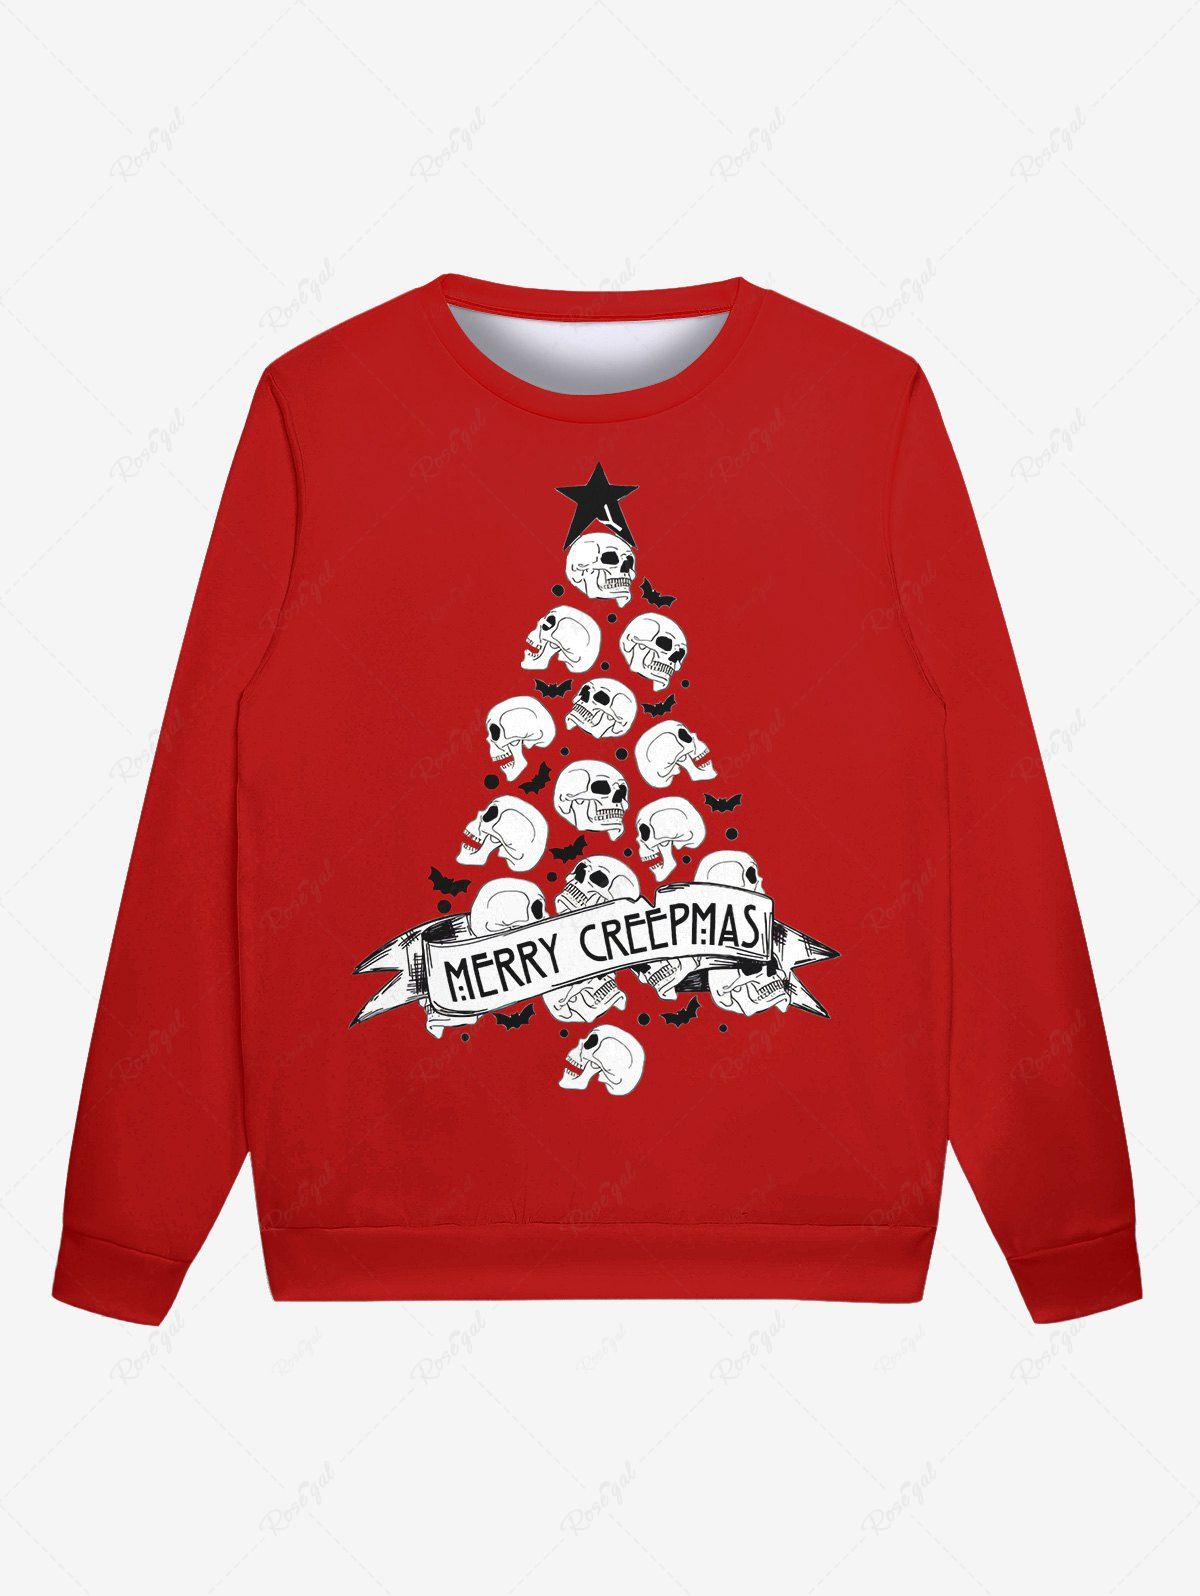 Gothic Christmas Tree Skulls Star Bat Ribbon Print Sweatshirt For Men Rouge 4XL